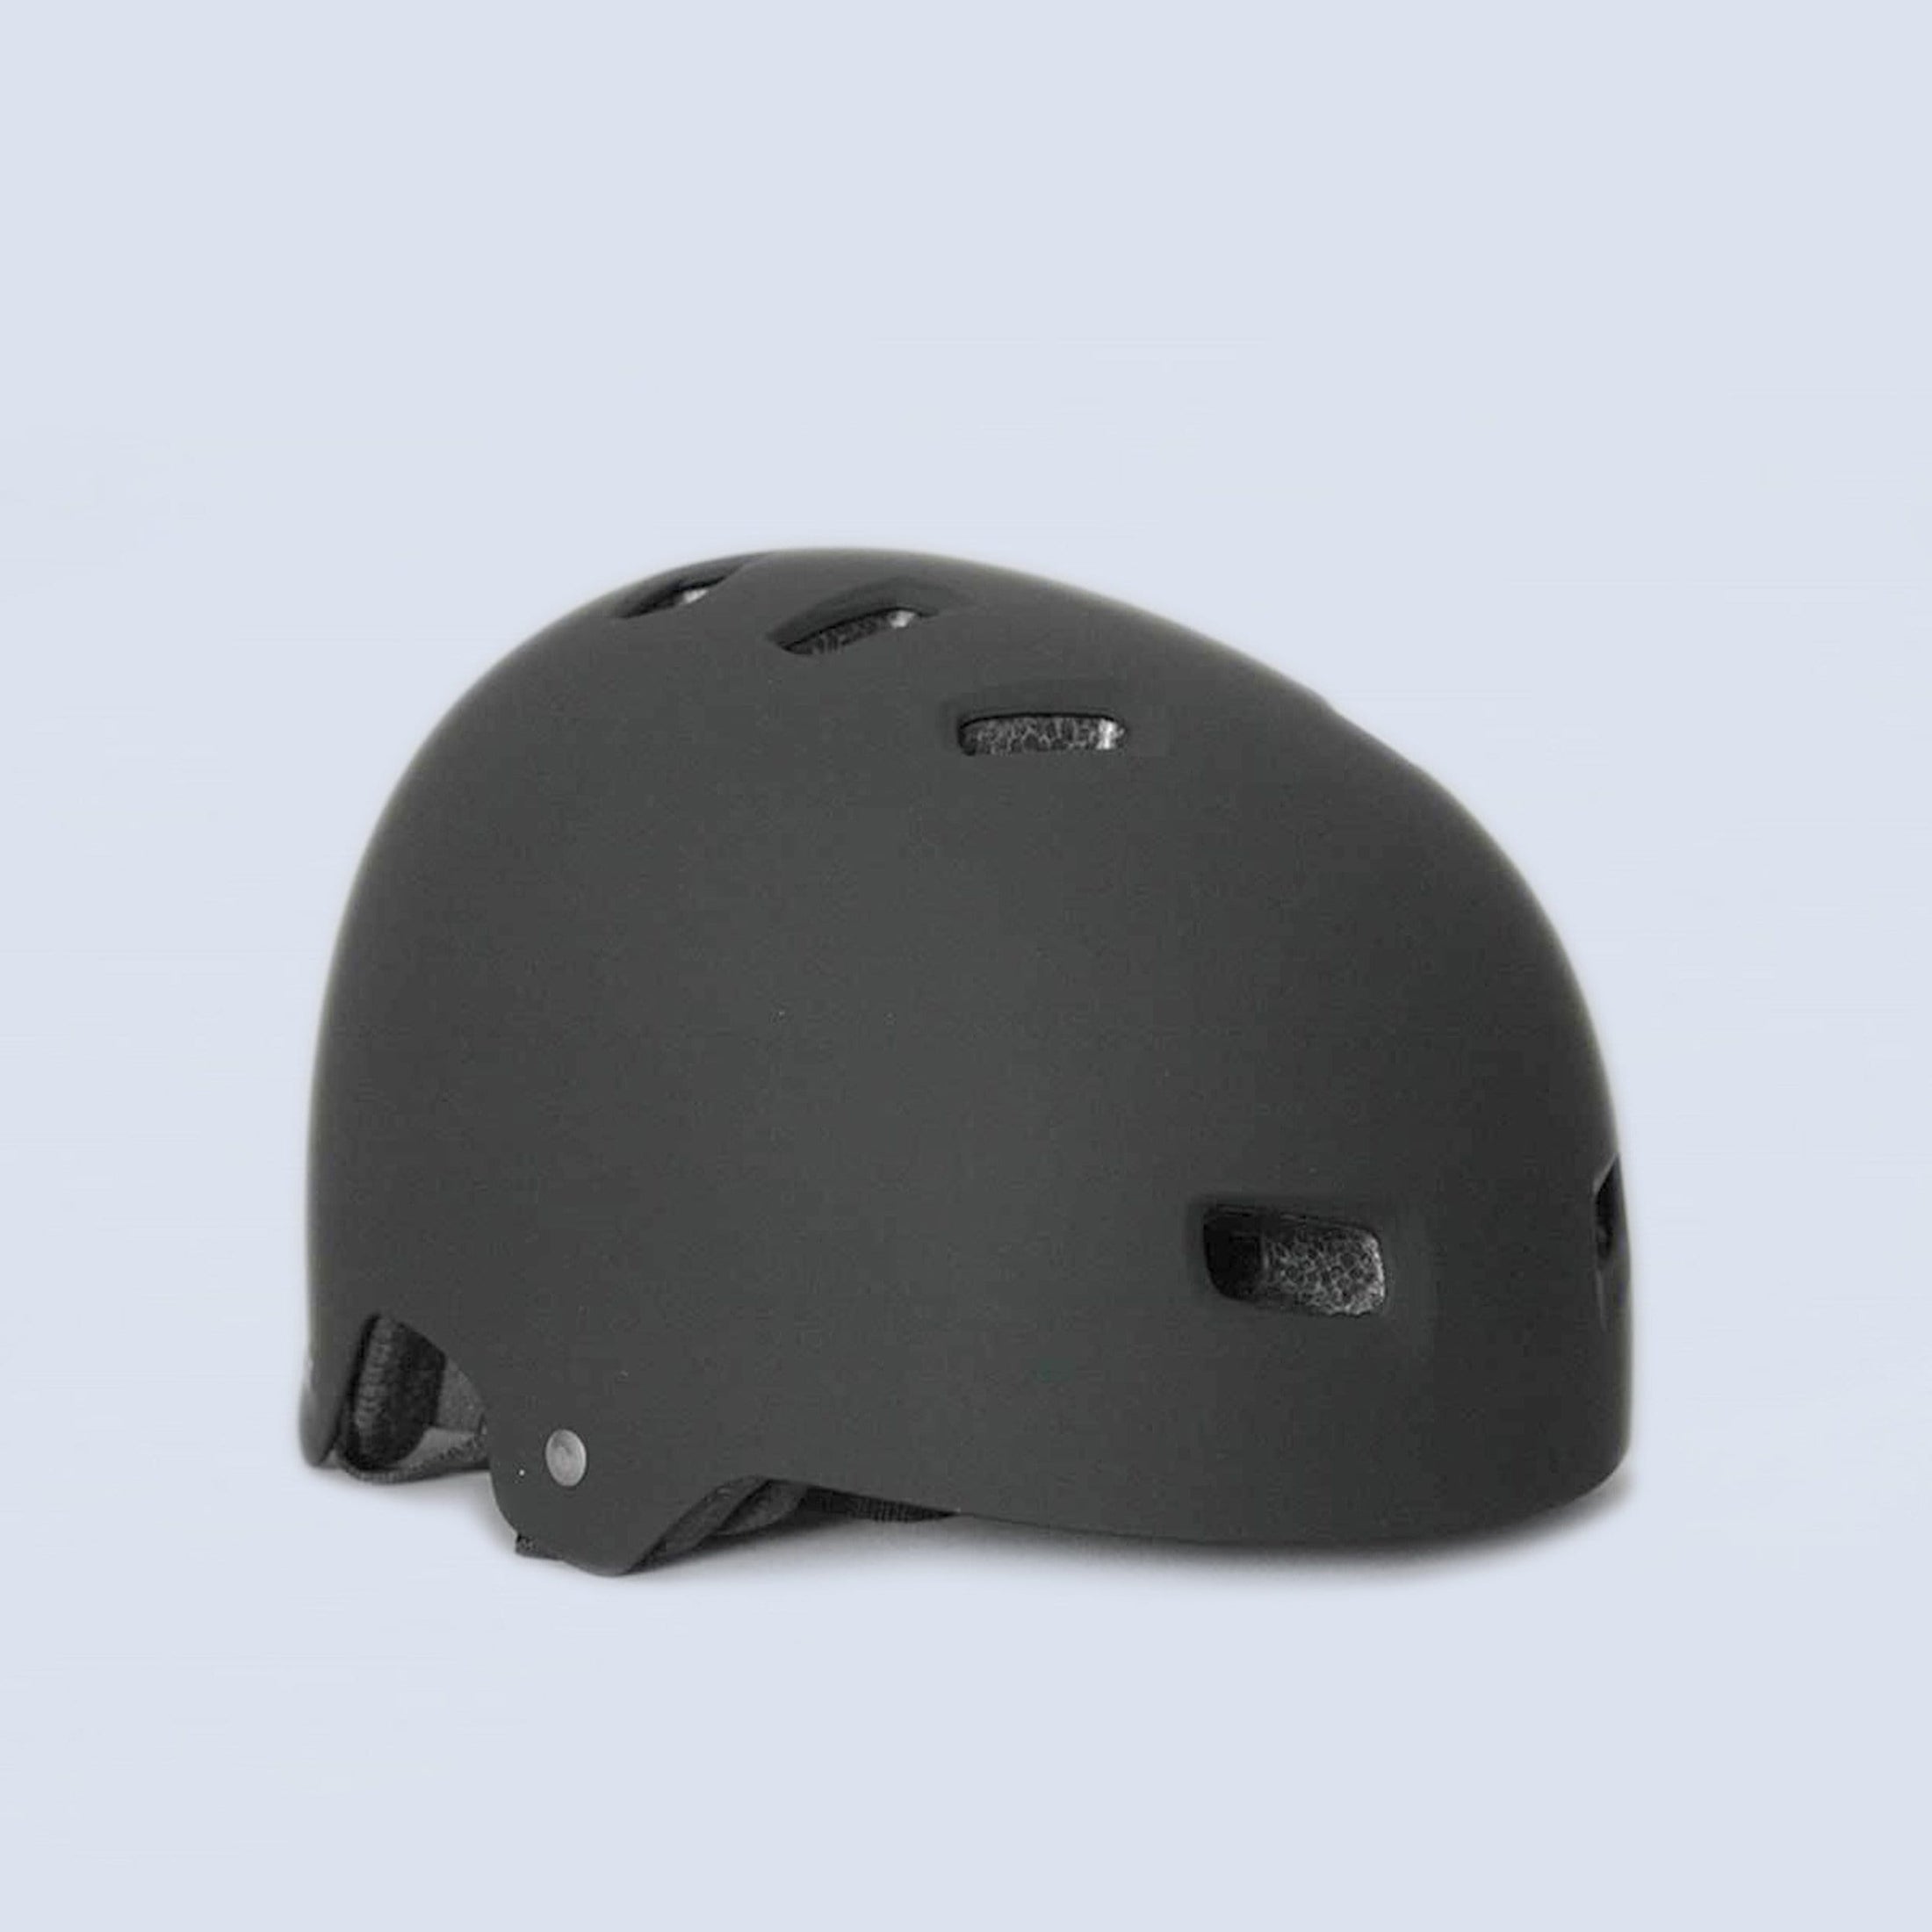 Bullet T35 Skateboard Helmet Matt Black